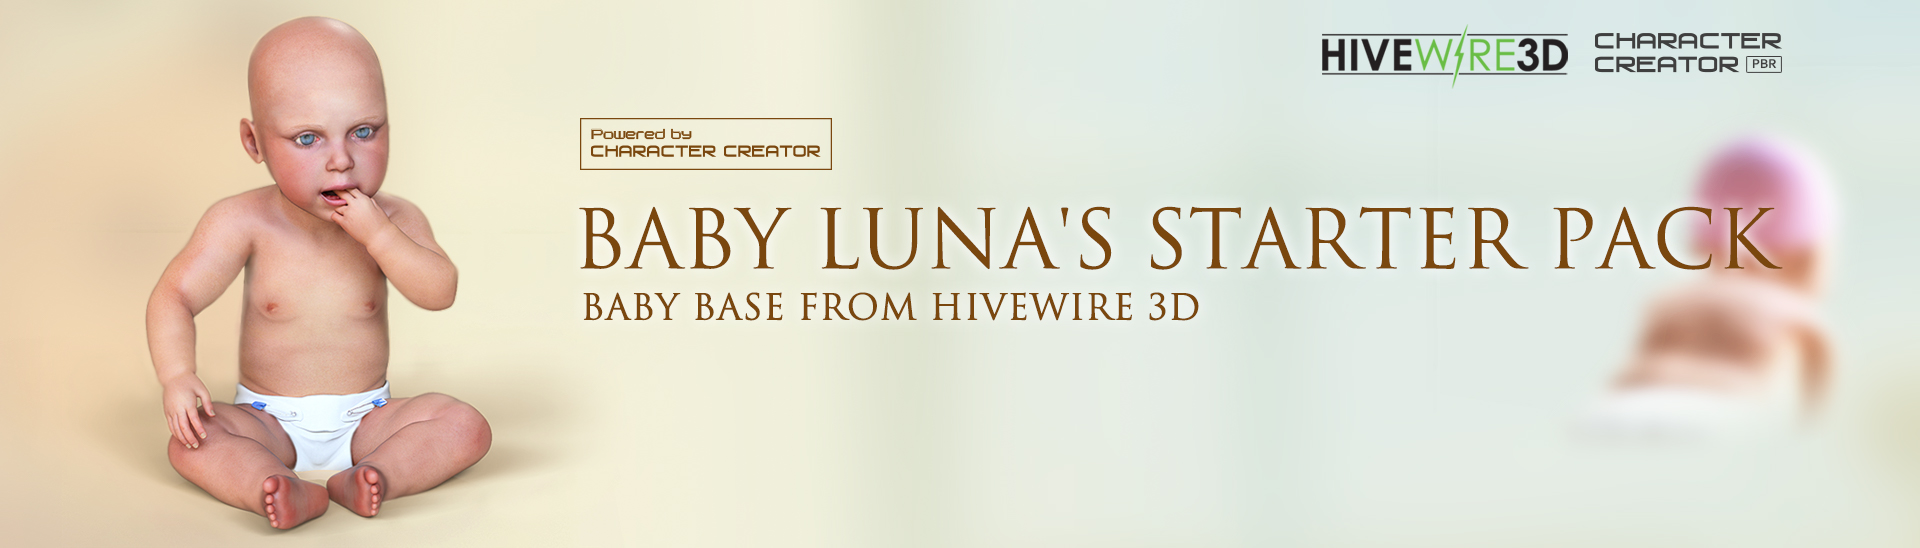 Baby Luna's Starter Pack